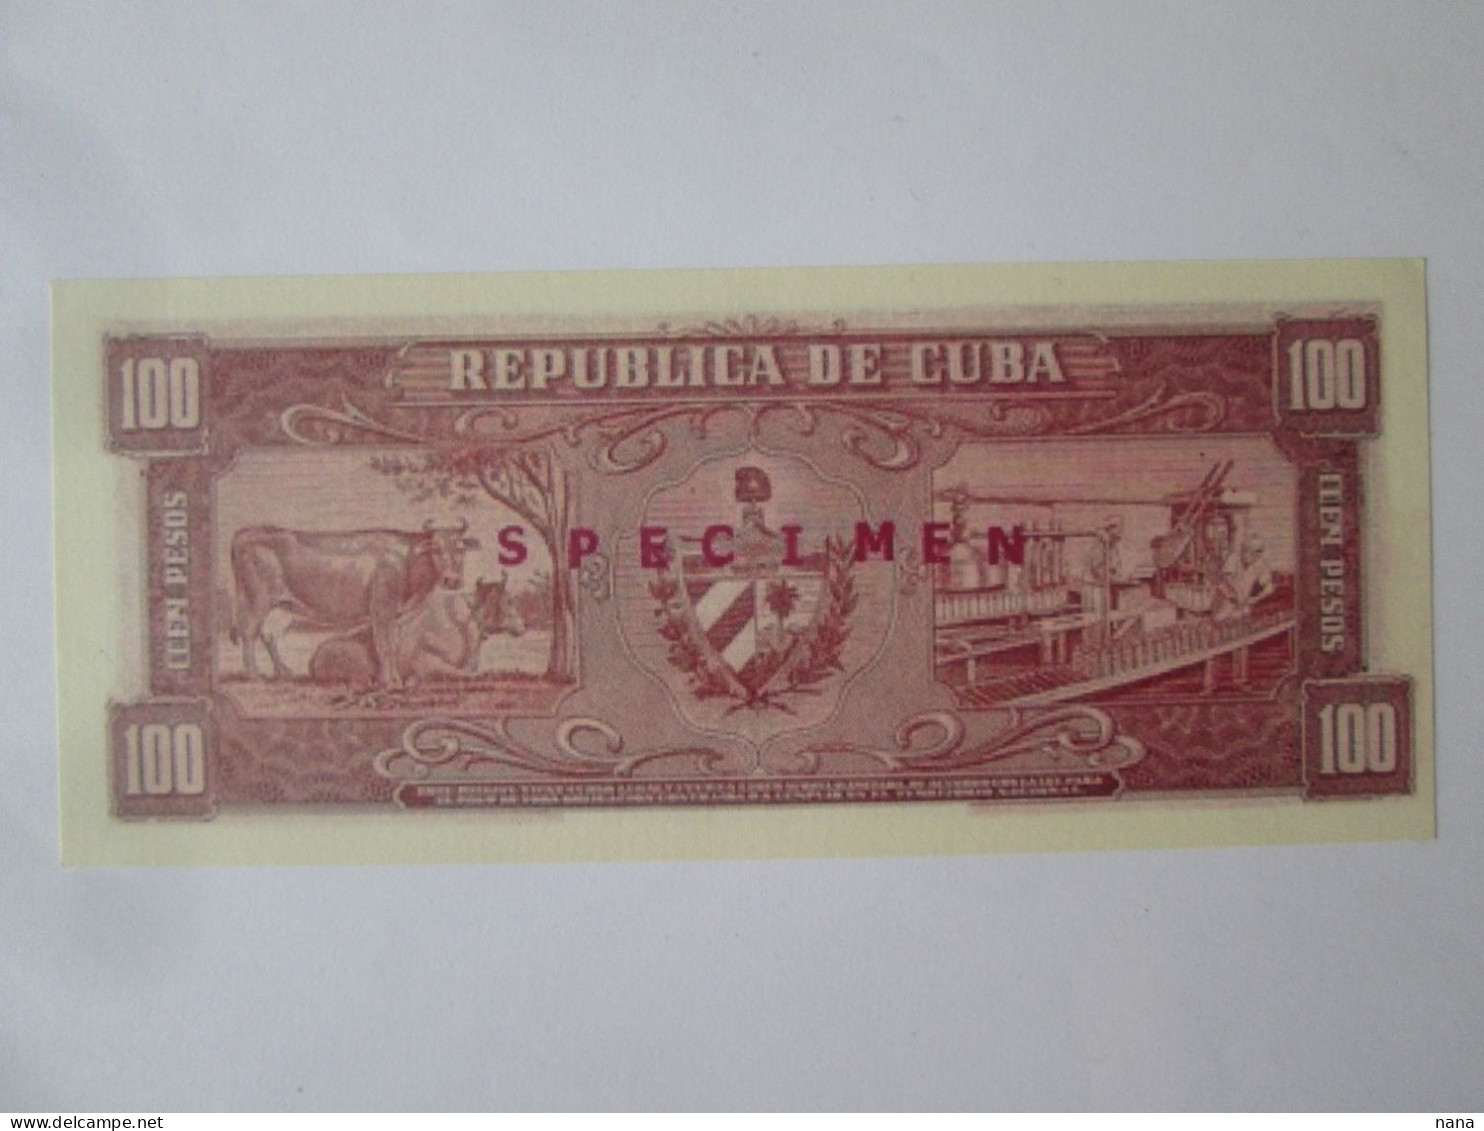 Cuba 100 Pesos Fantaisie BilletSpecimen Fidel Castro Et Che Guevara/Specimen Fantasy Banknote Fidel Castro & Che Guevara - Cuba